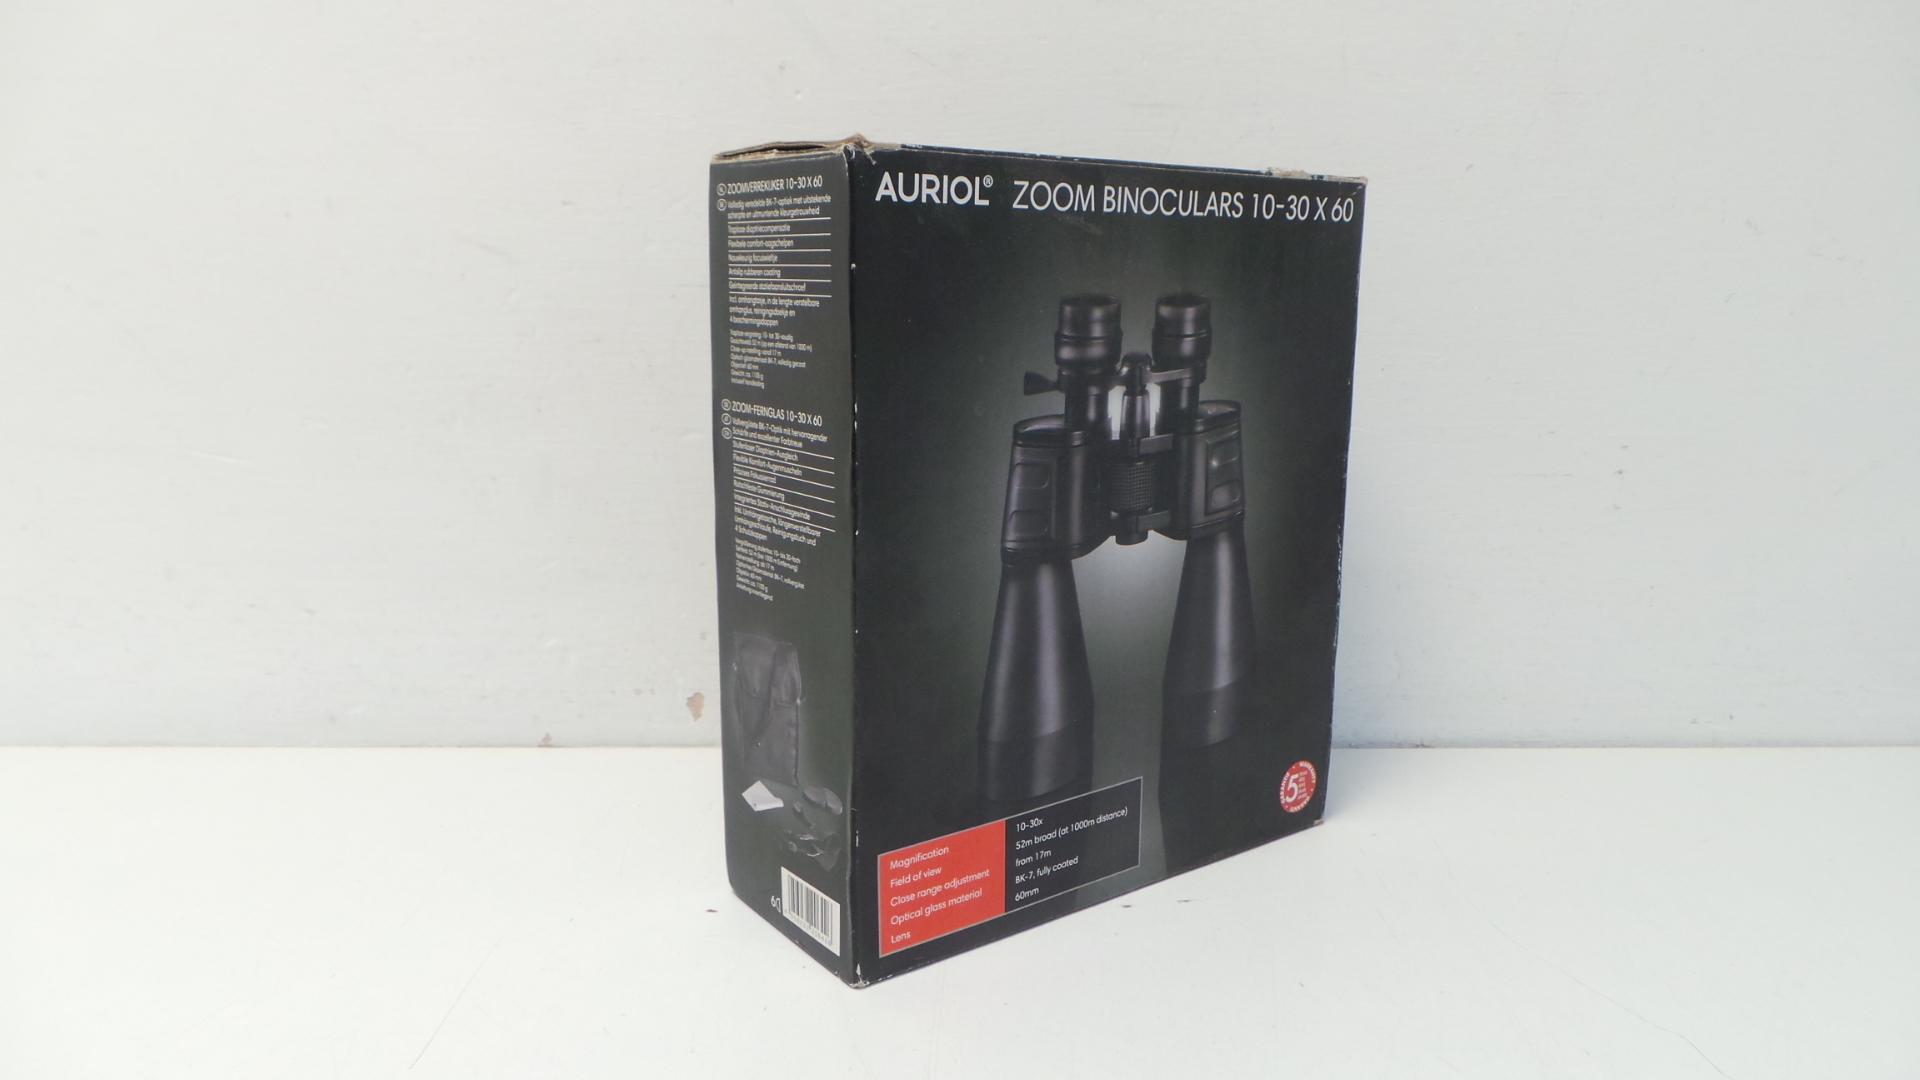 Zoom x 60 Binoculars Auriol 10-30